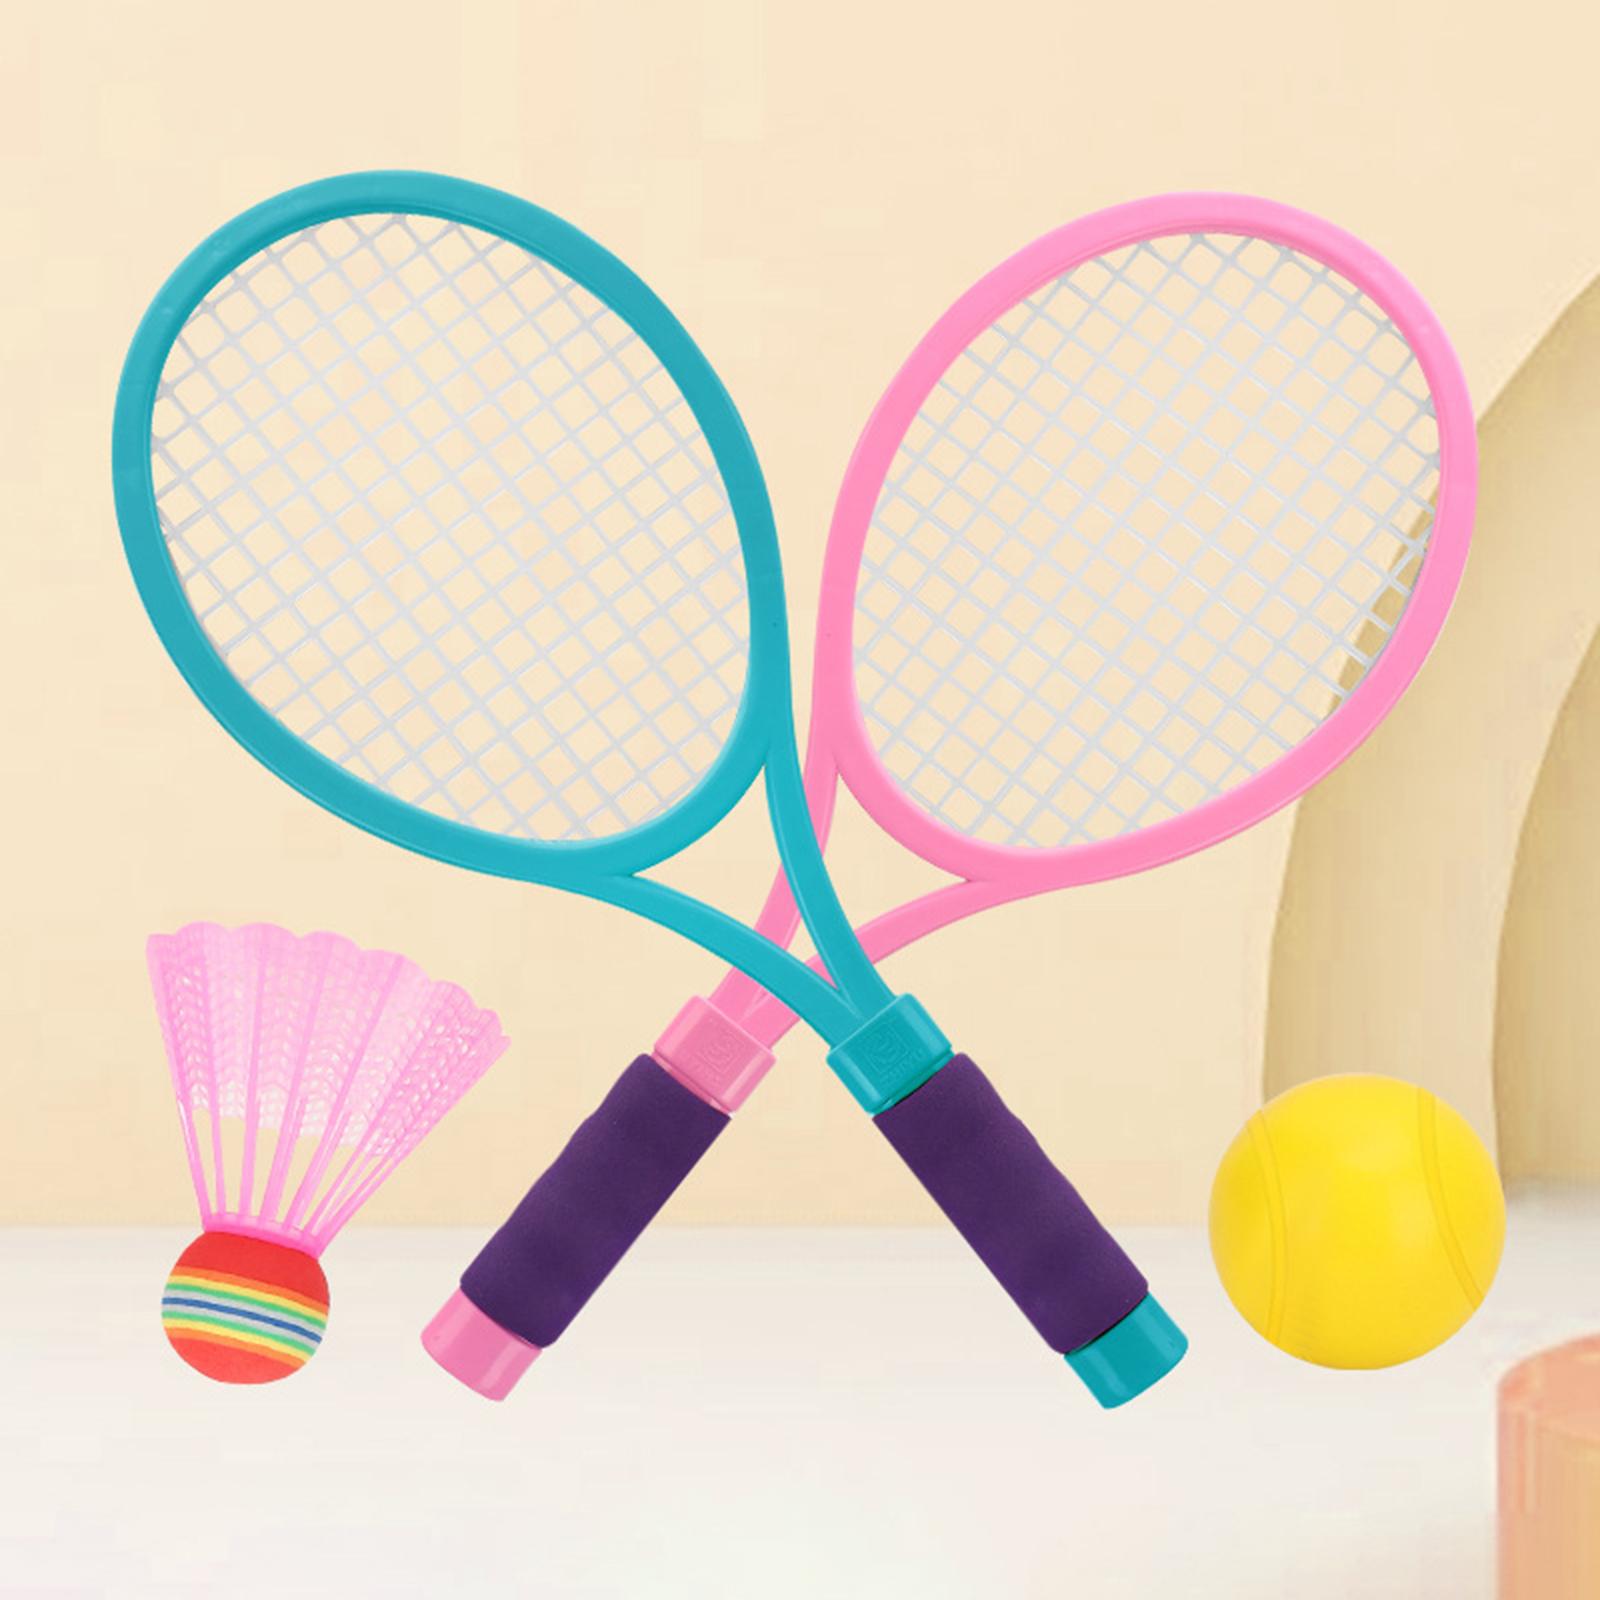 Badminton Sets Portable Badminton Birdies Tennis Racquet Kids Tennis Rackets S